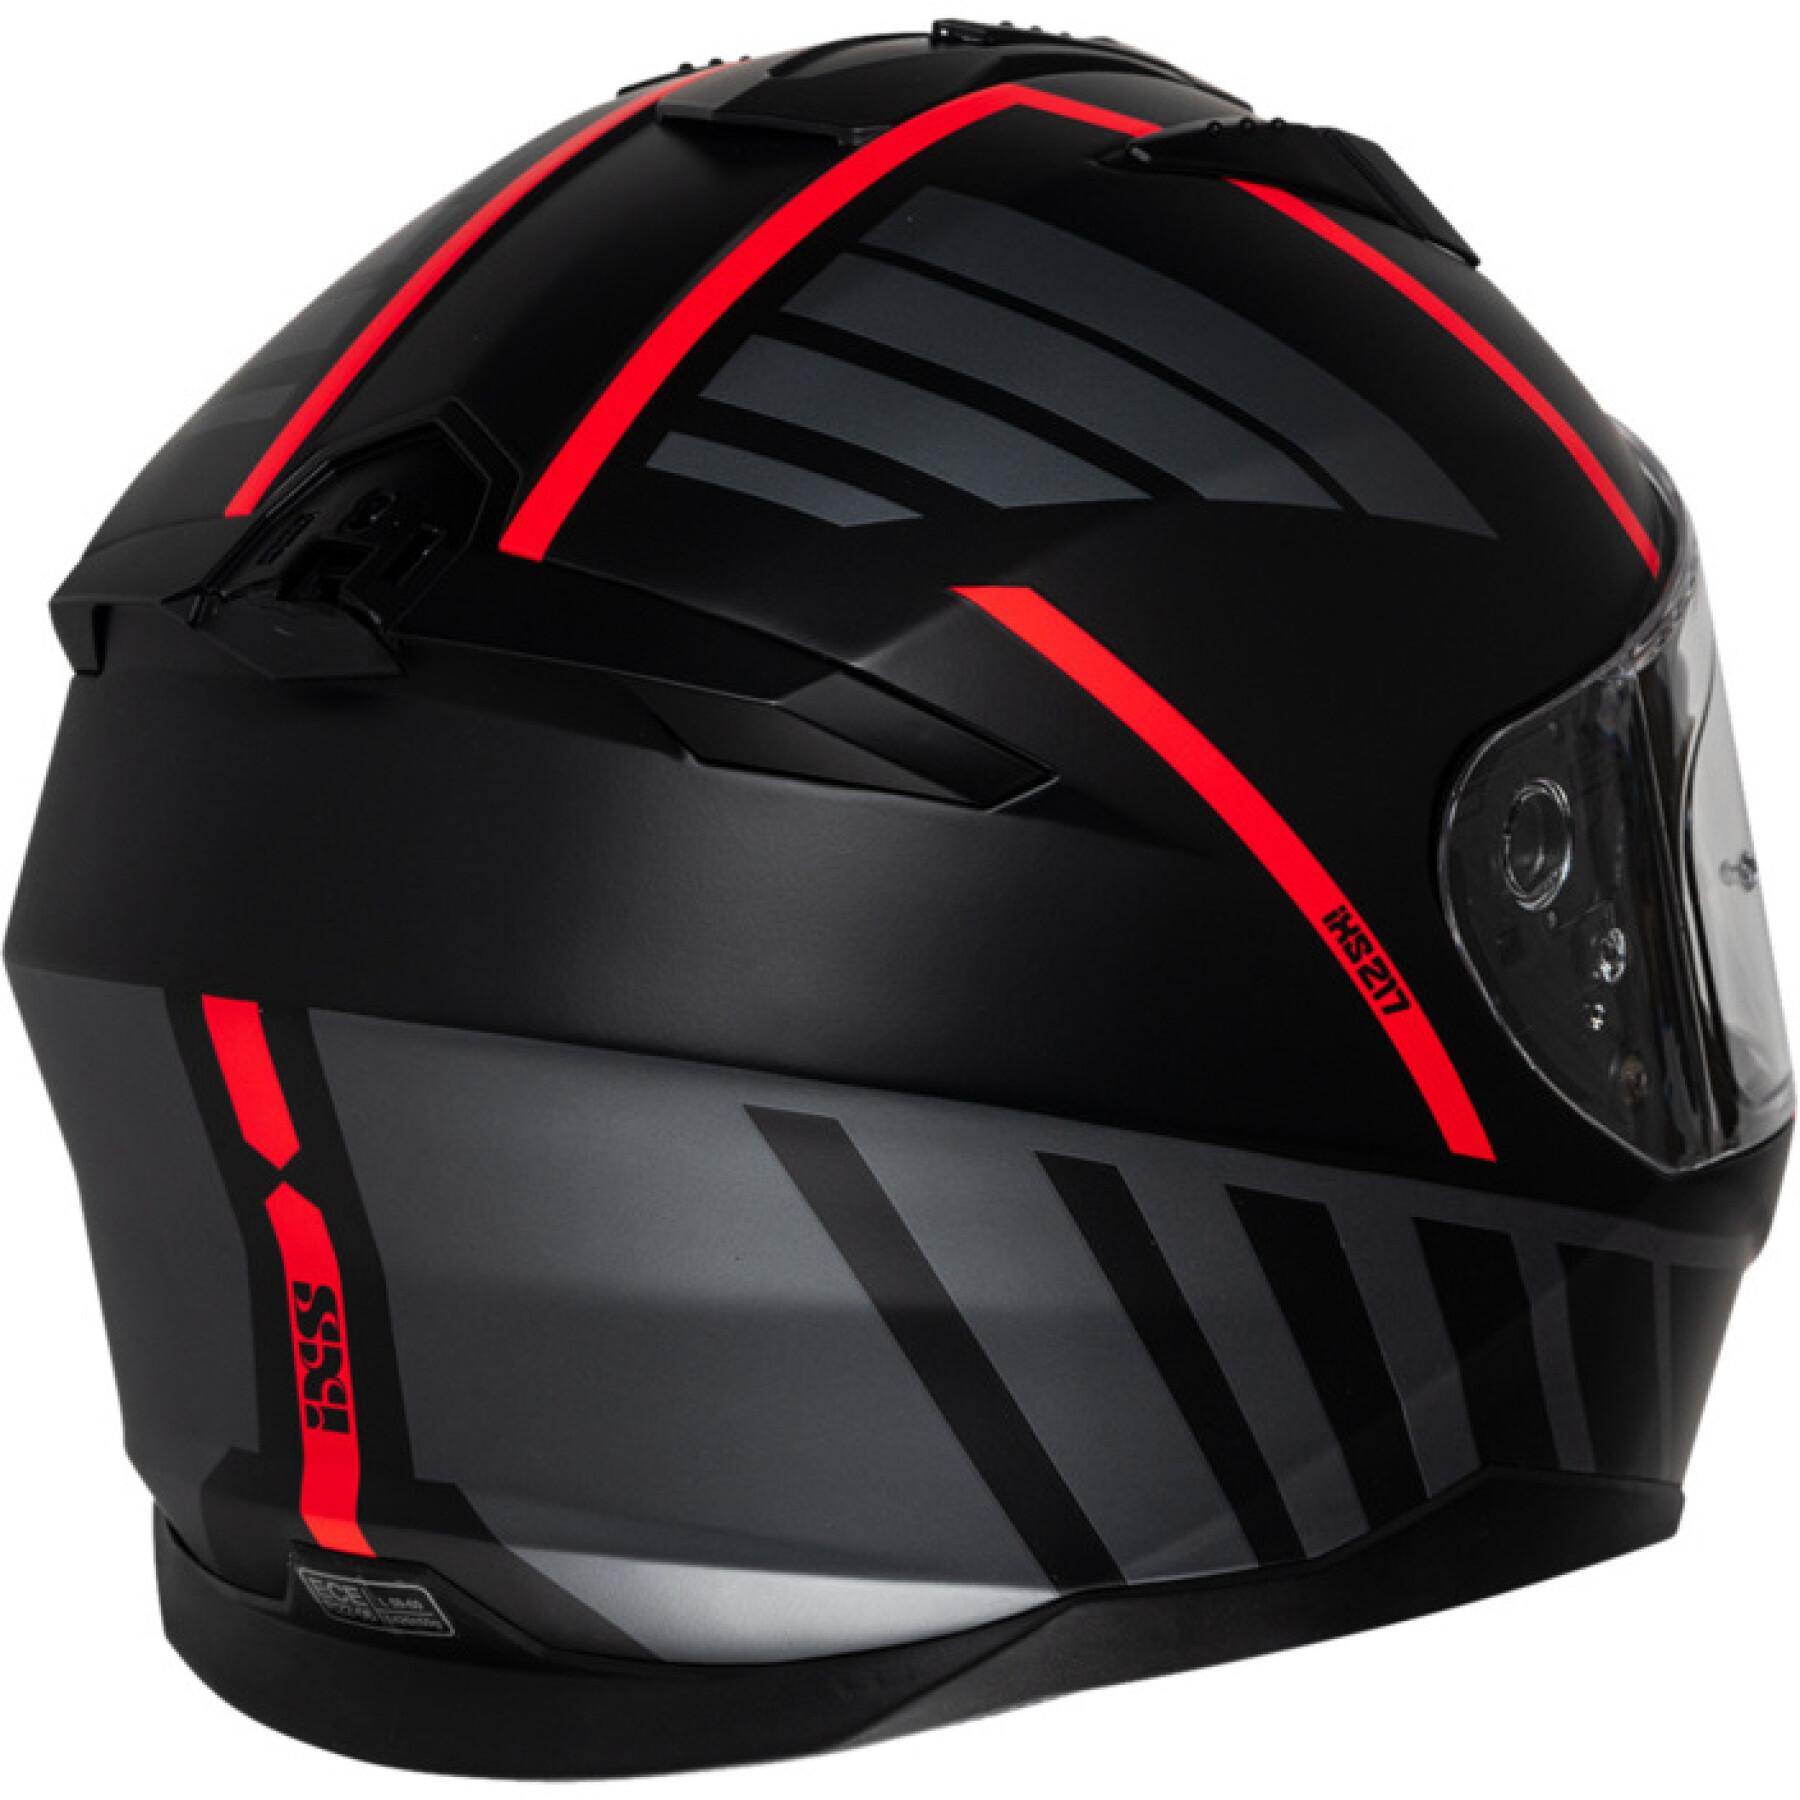 Full face motorcycle helmet IXS 217 2.0